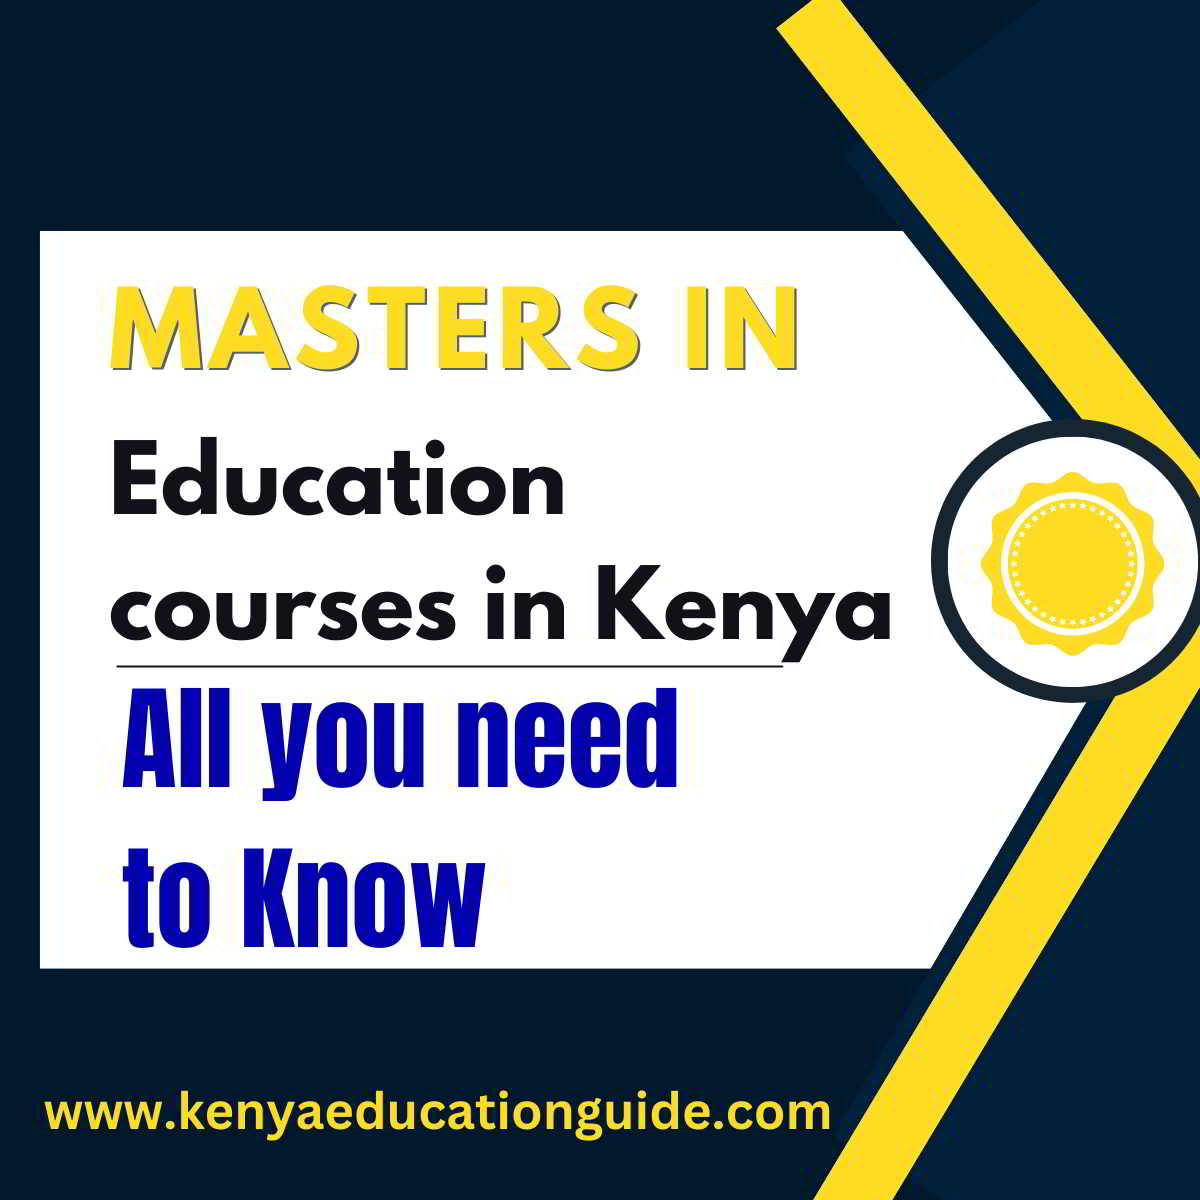 Masters in education courses in Kenya